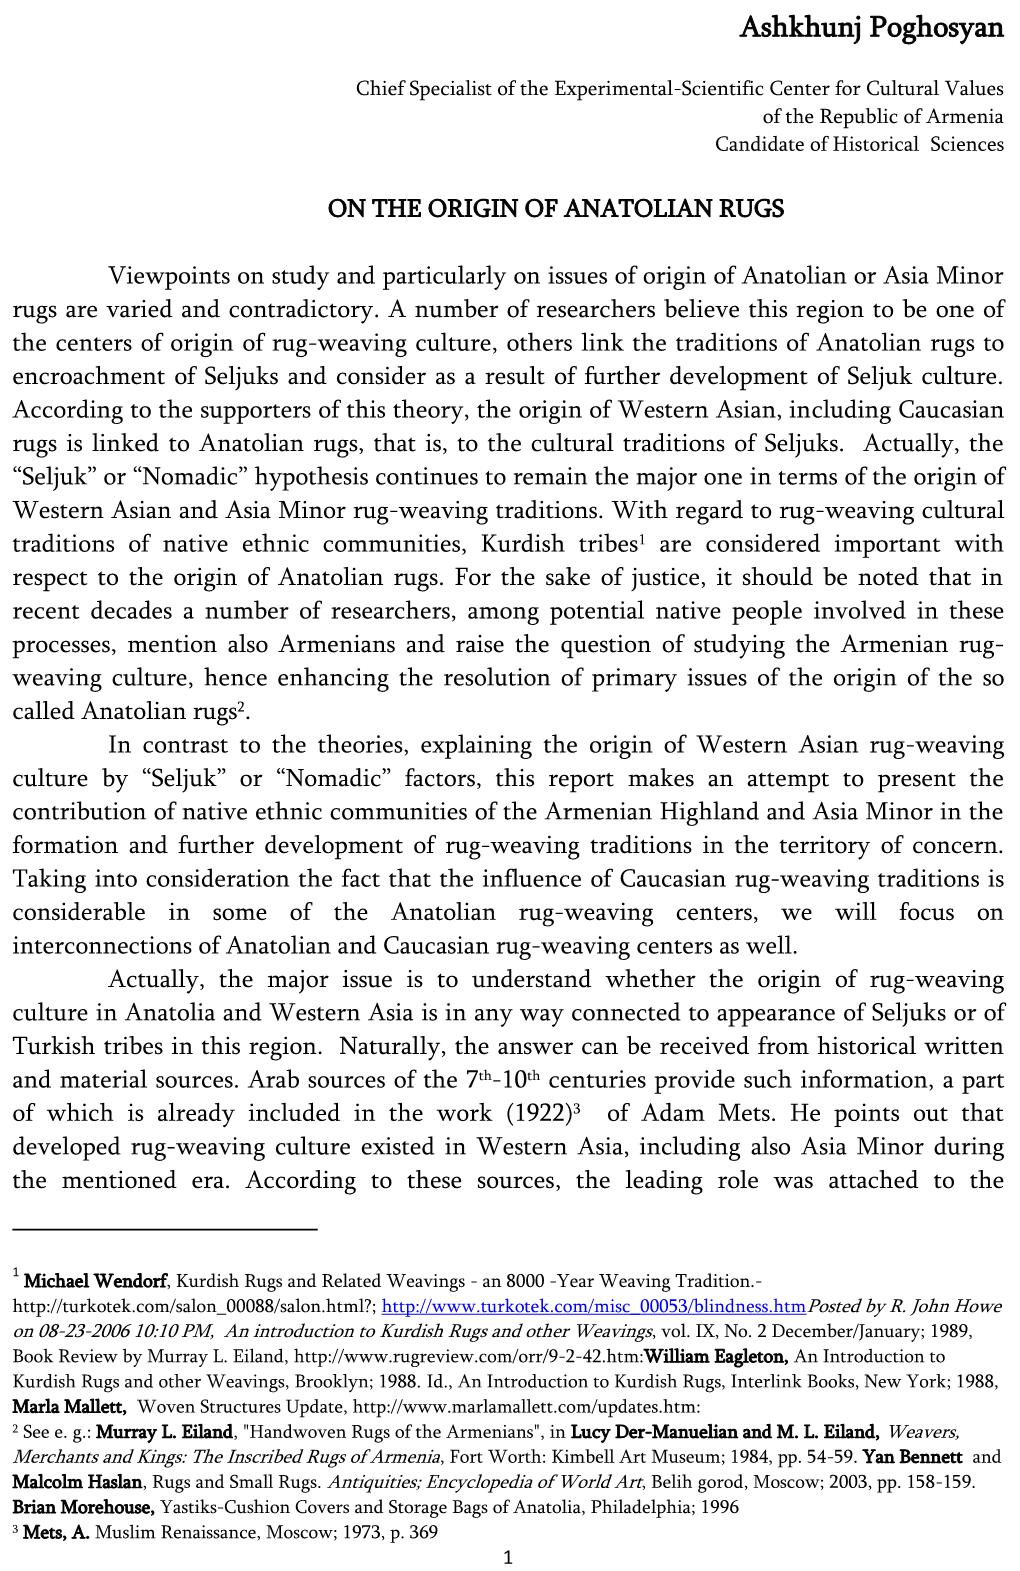 Origin of Anatolian Rugs